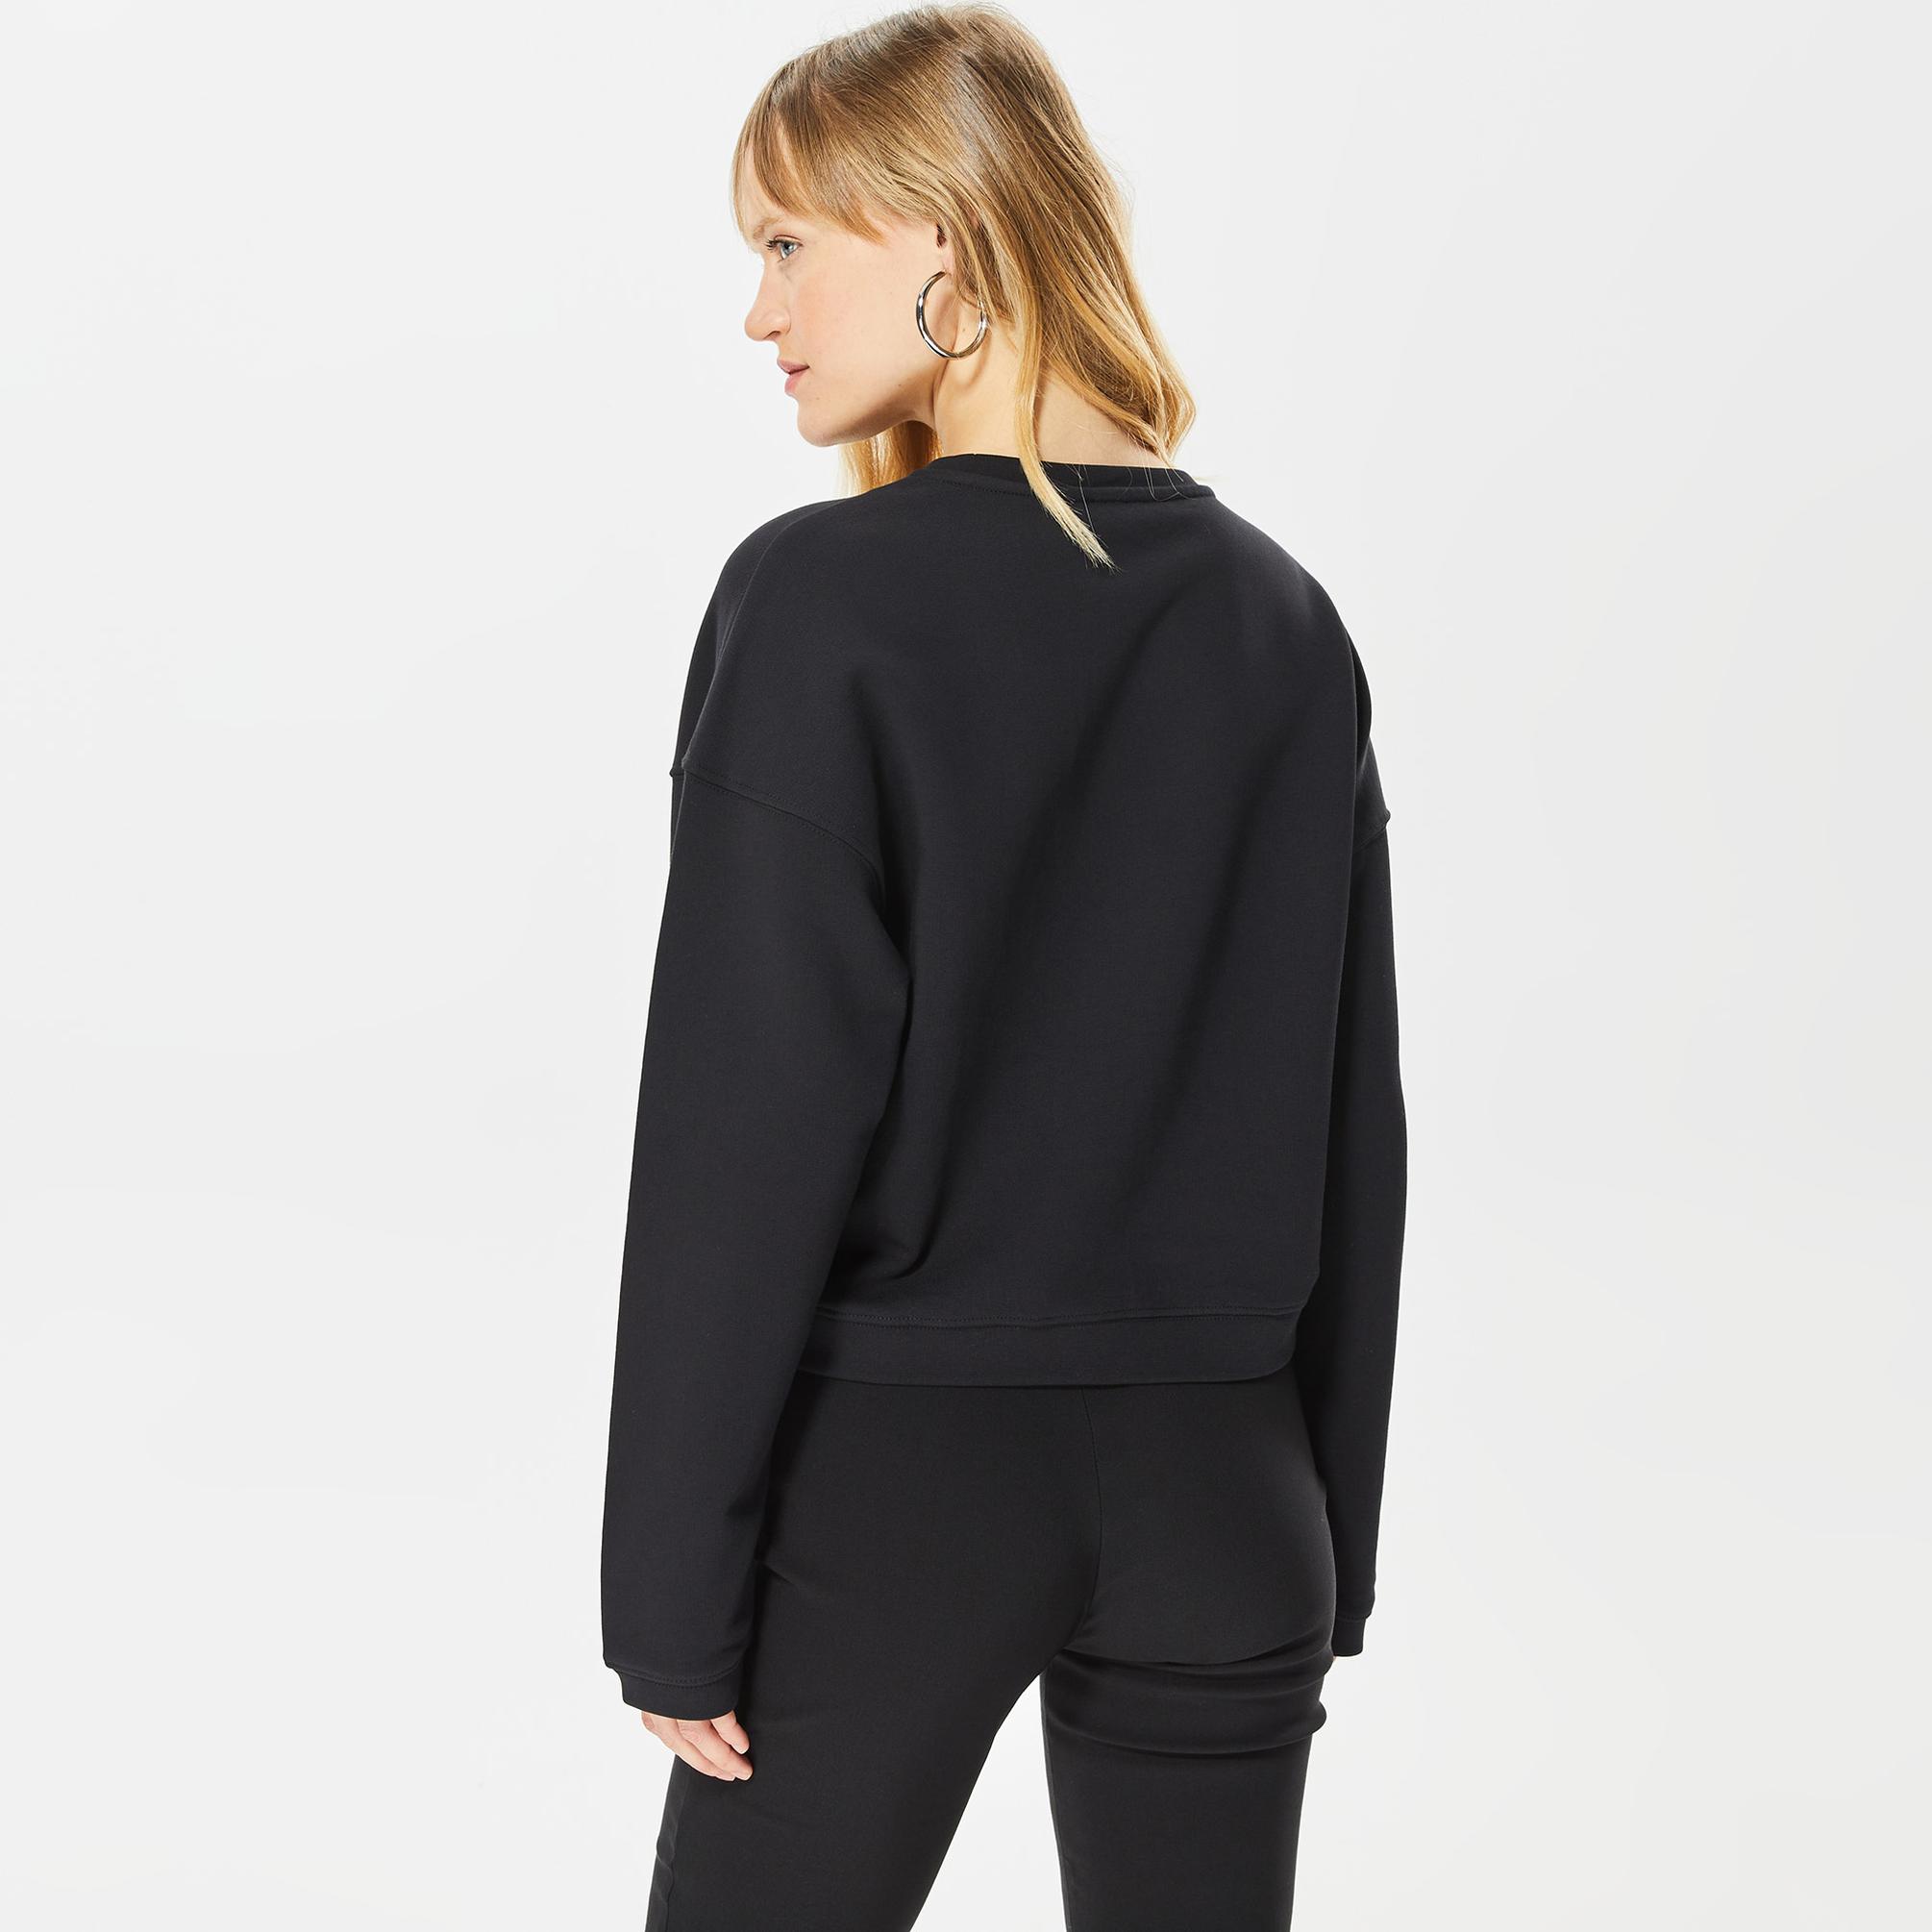  Les Benjamins Core Kadın Siyah Sweatshirt